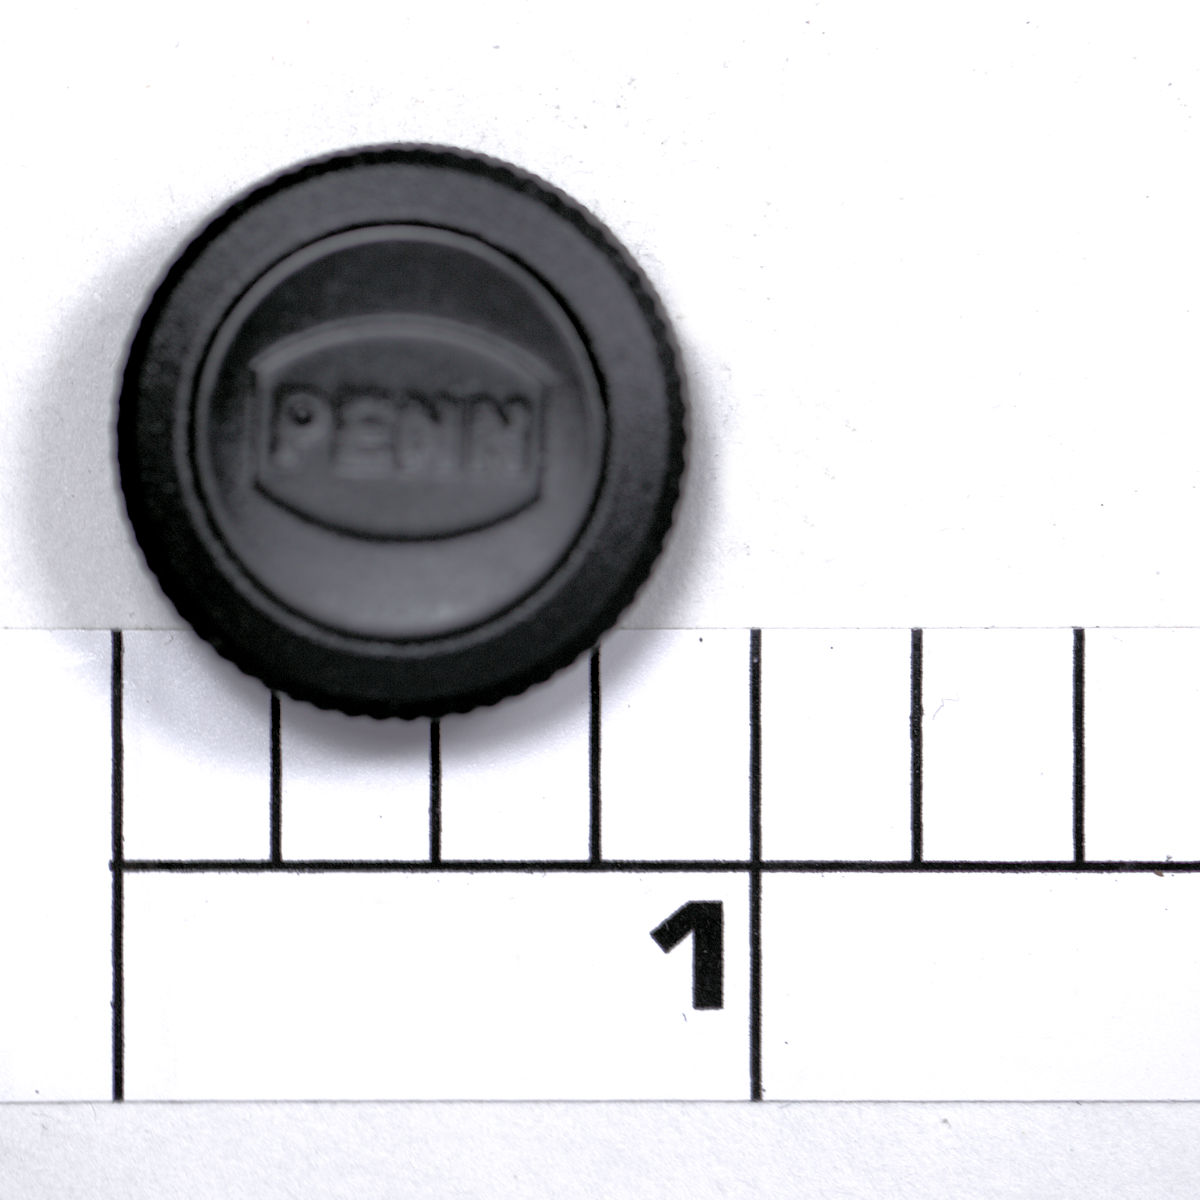 233A-CFTii5000 Cap, Handle Cap (Closed Bearing Cover) (Black)